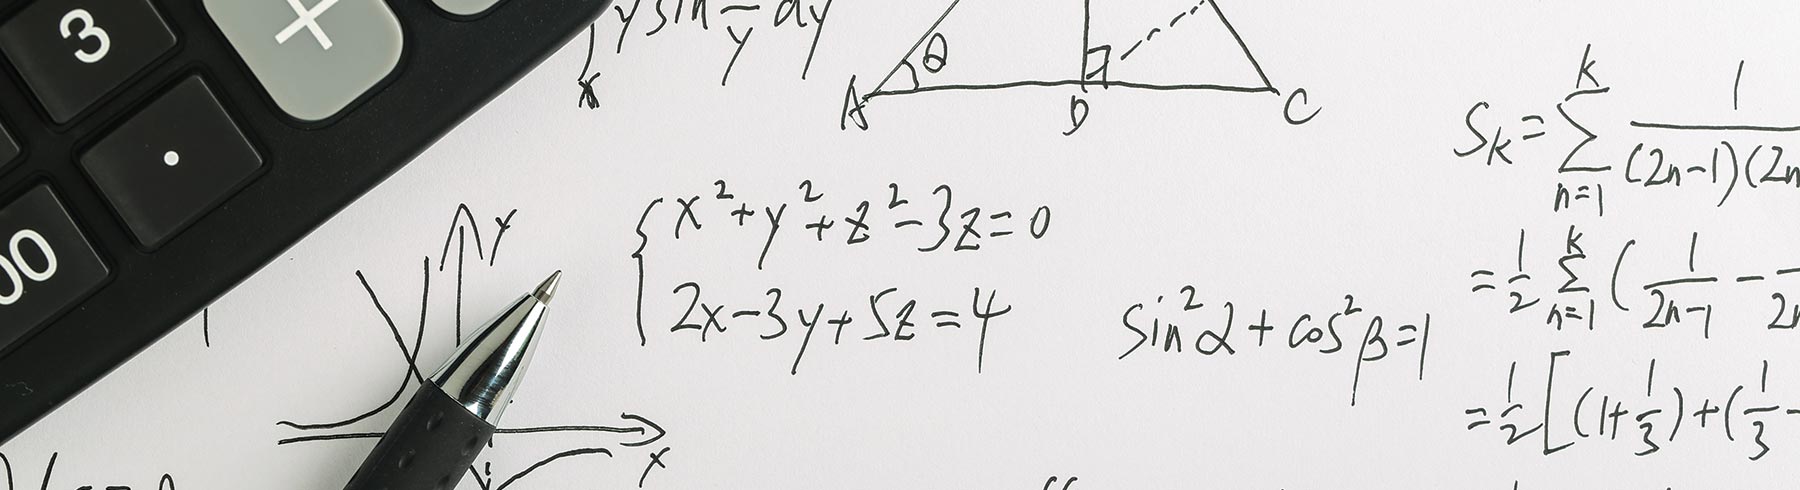 A closeup of some calculations and a calculator 